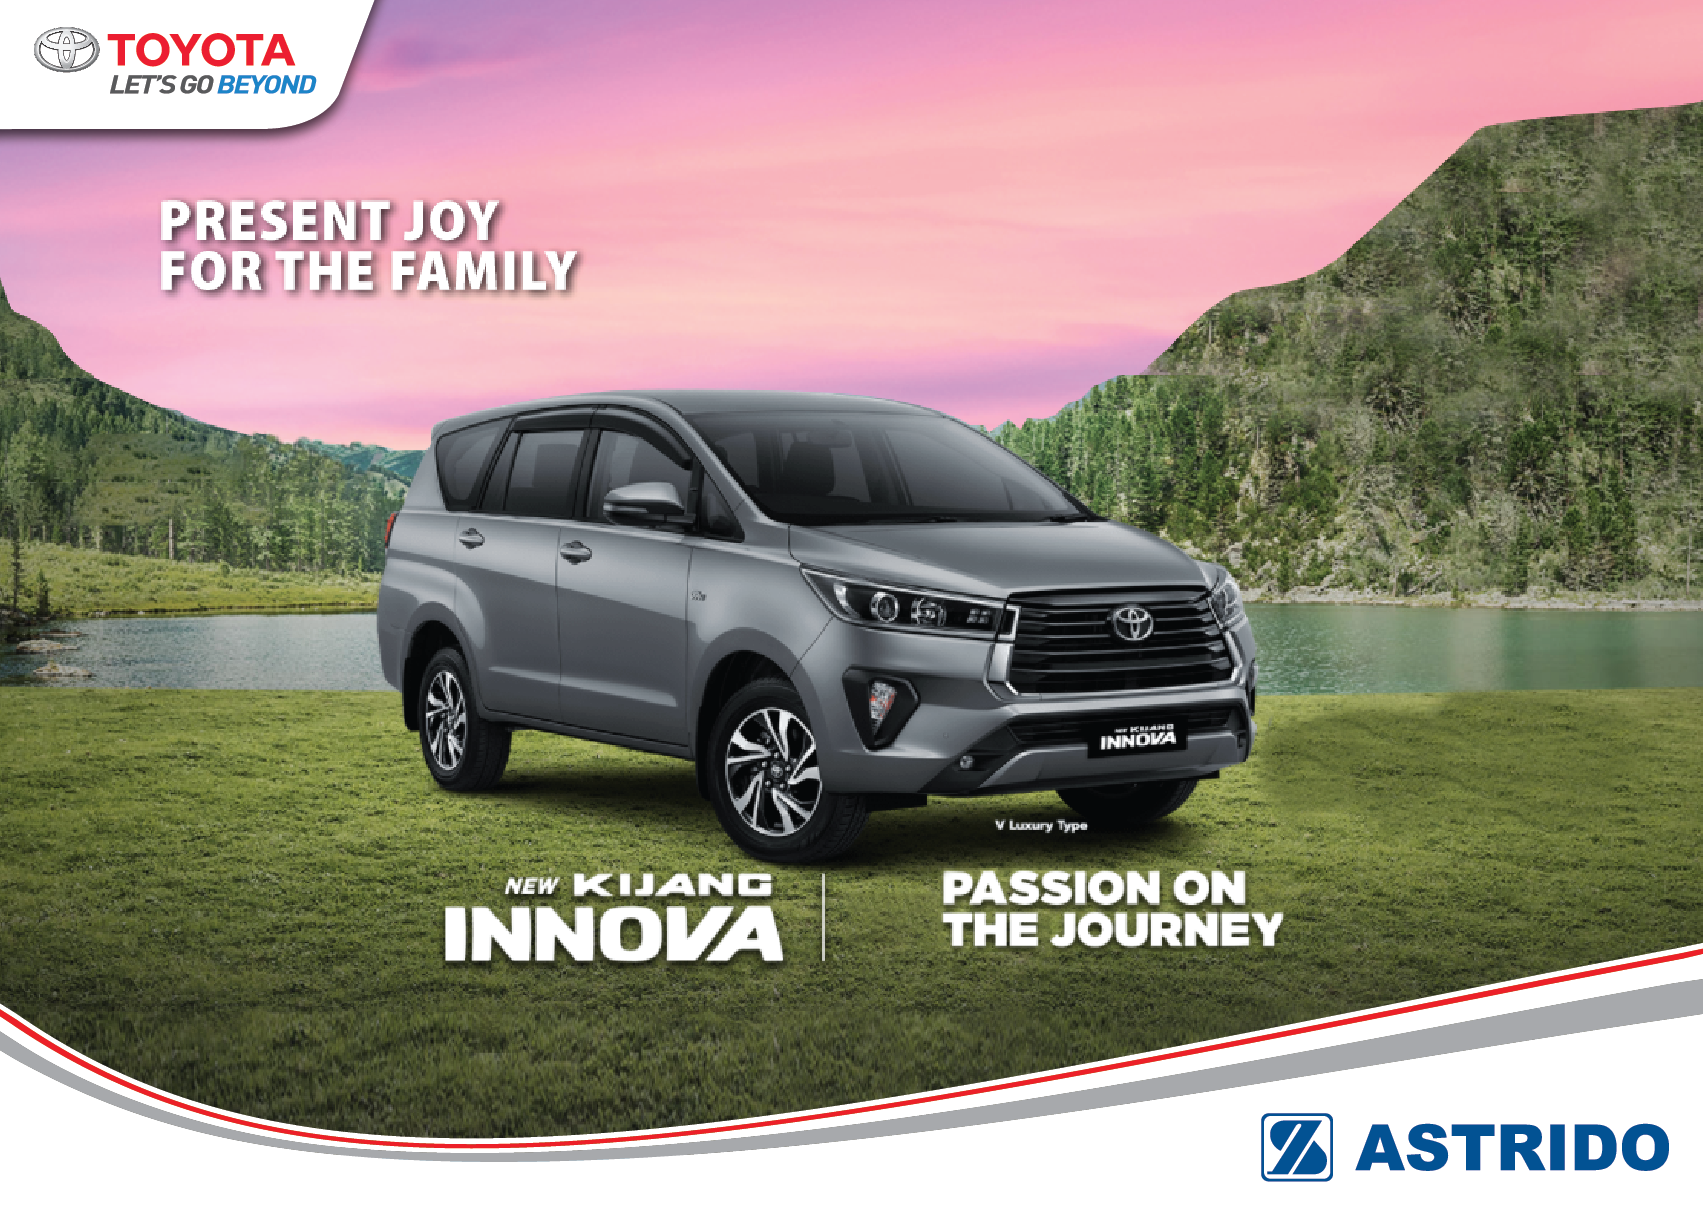 Toyota AStrido - Toyota Hadirkan MPV Keluarga Indonesia New Kijang Innova